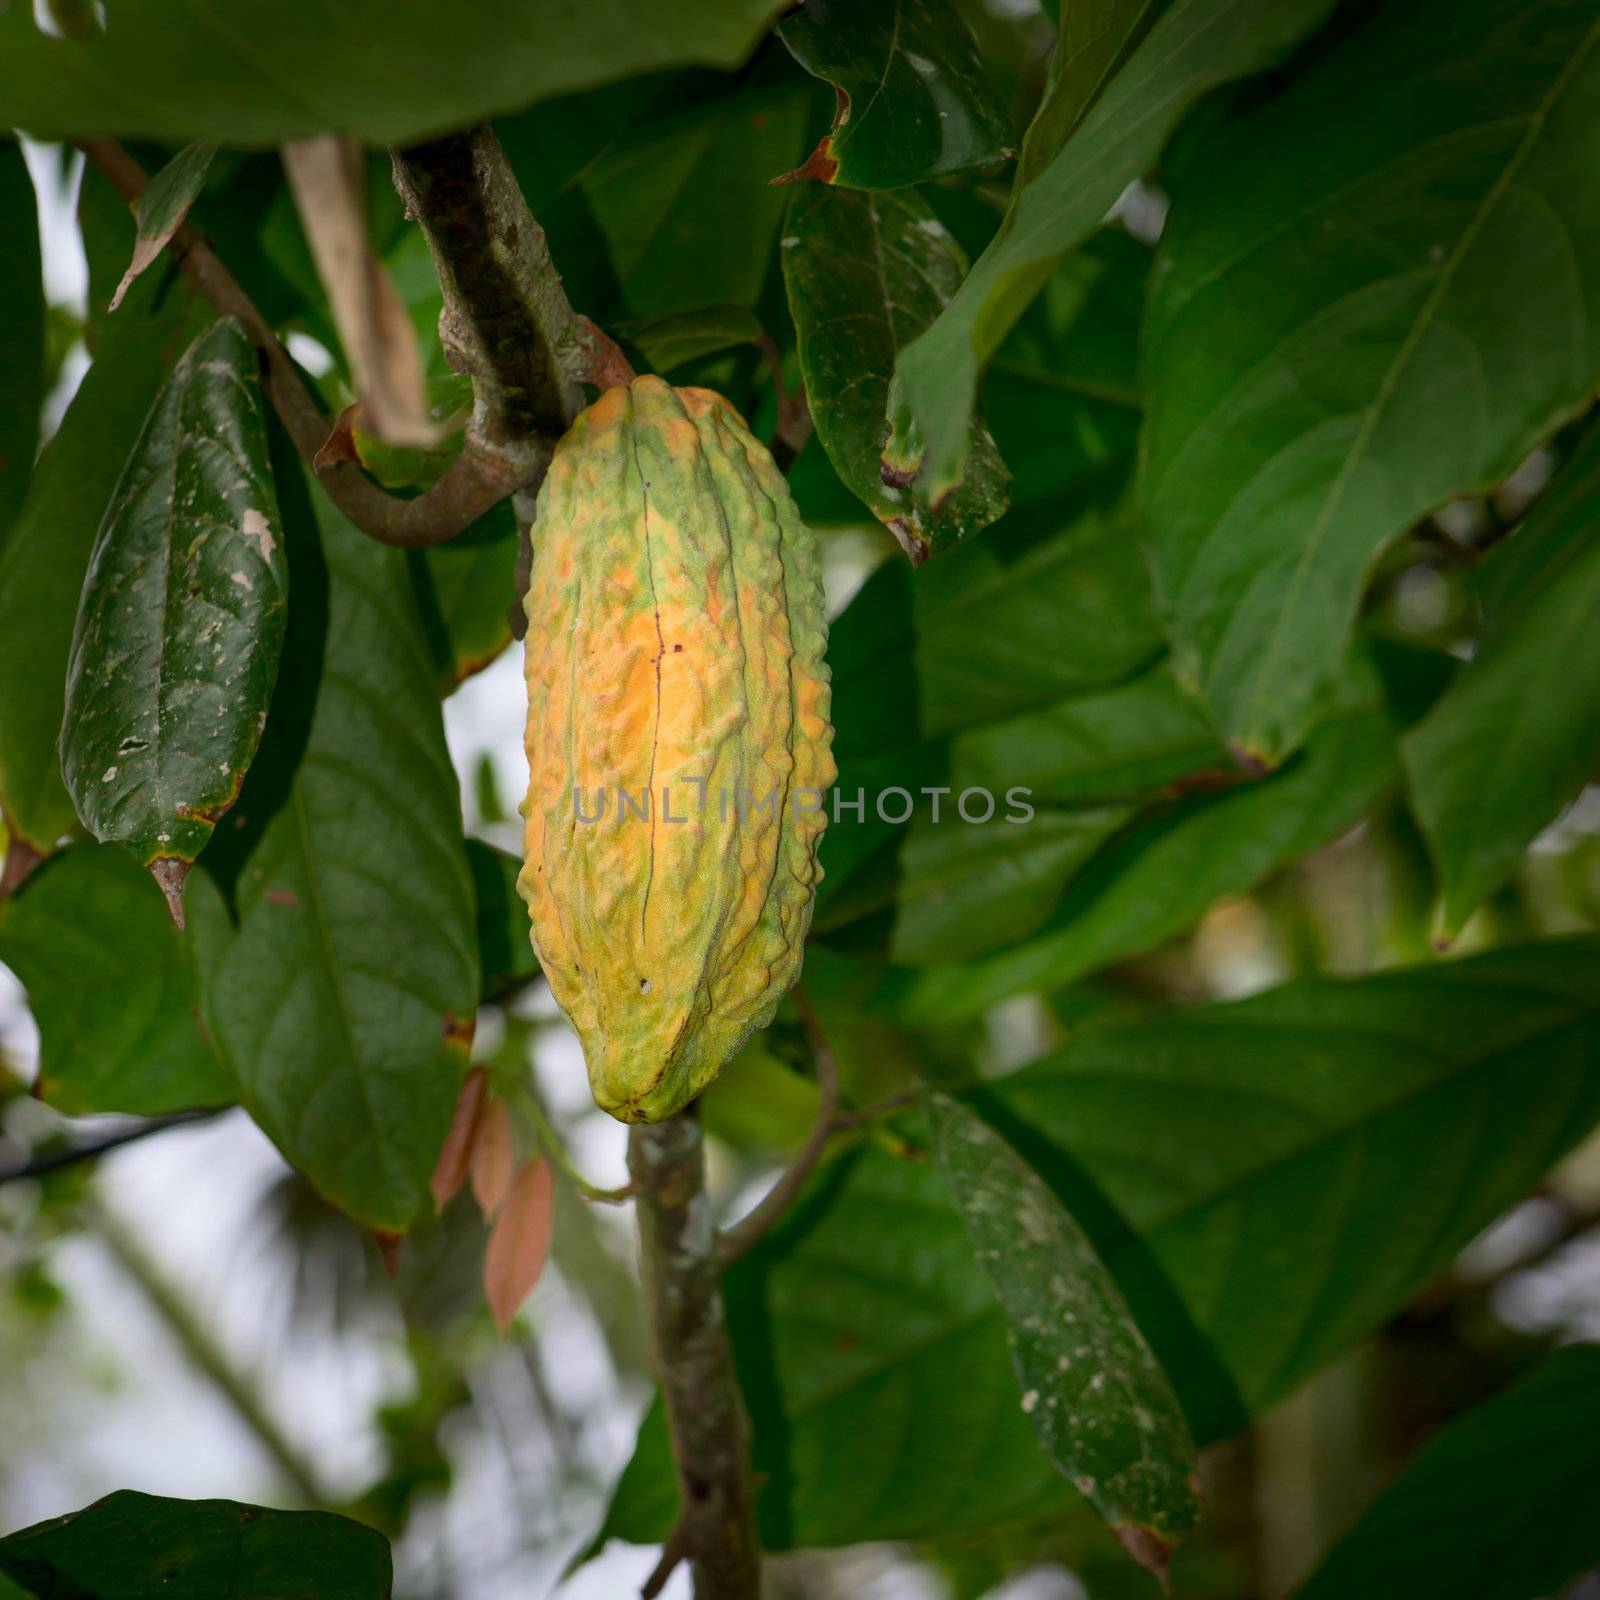 Cocoa pod on the tree by iryna_rasko